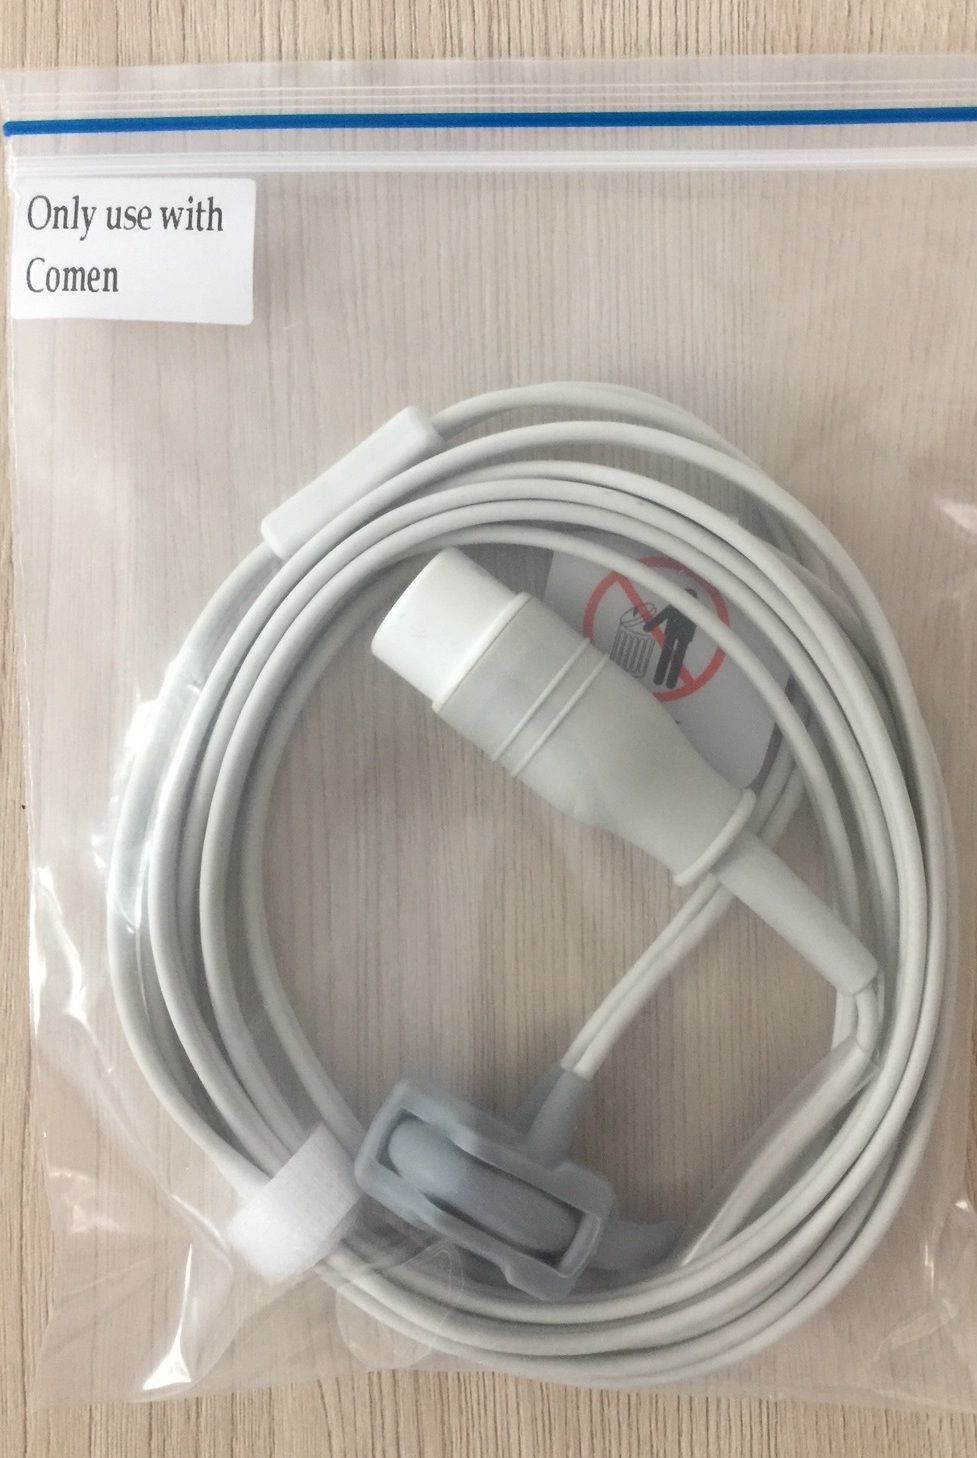 Compatible Spo2 Neonate wrap sensor cable for Comen NC Series_สายเคเบิ้ลเซนเซอร์วัดแซทออกซิเจนในเลือดเครื่องมอนิเตอร์โคเมน